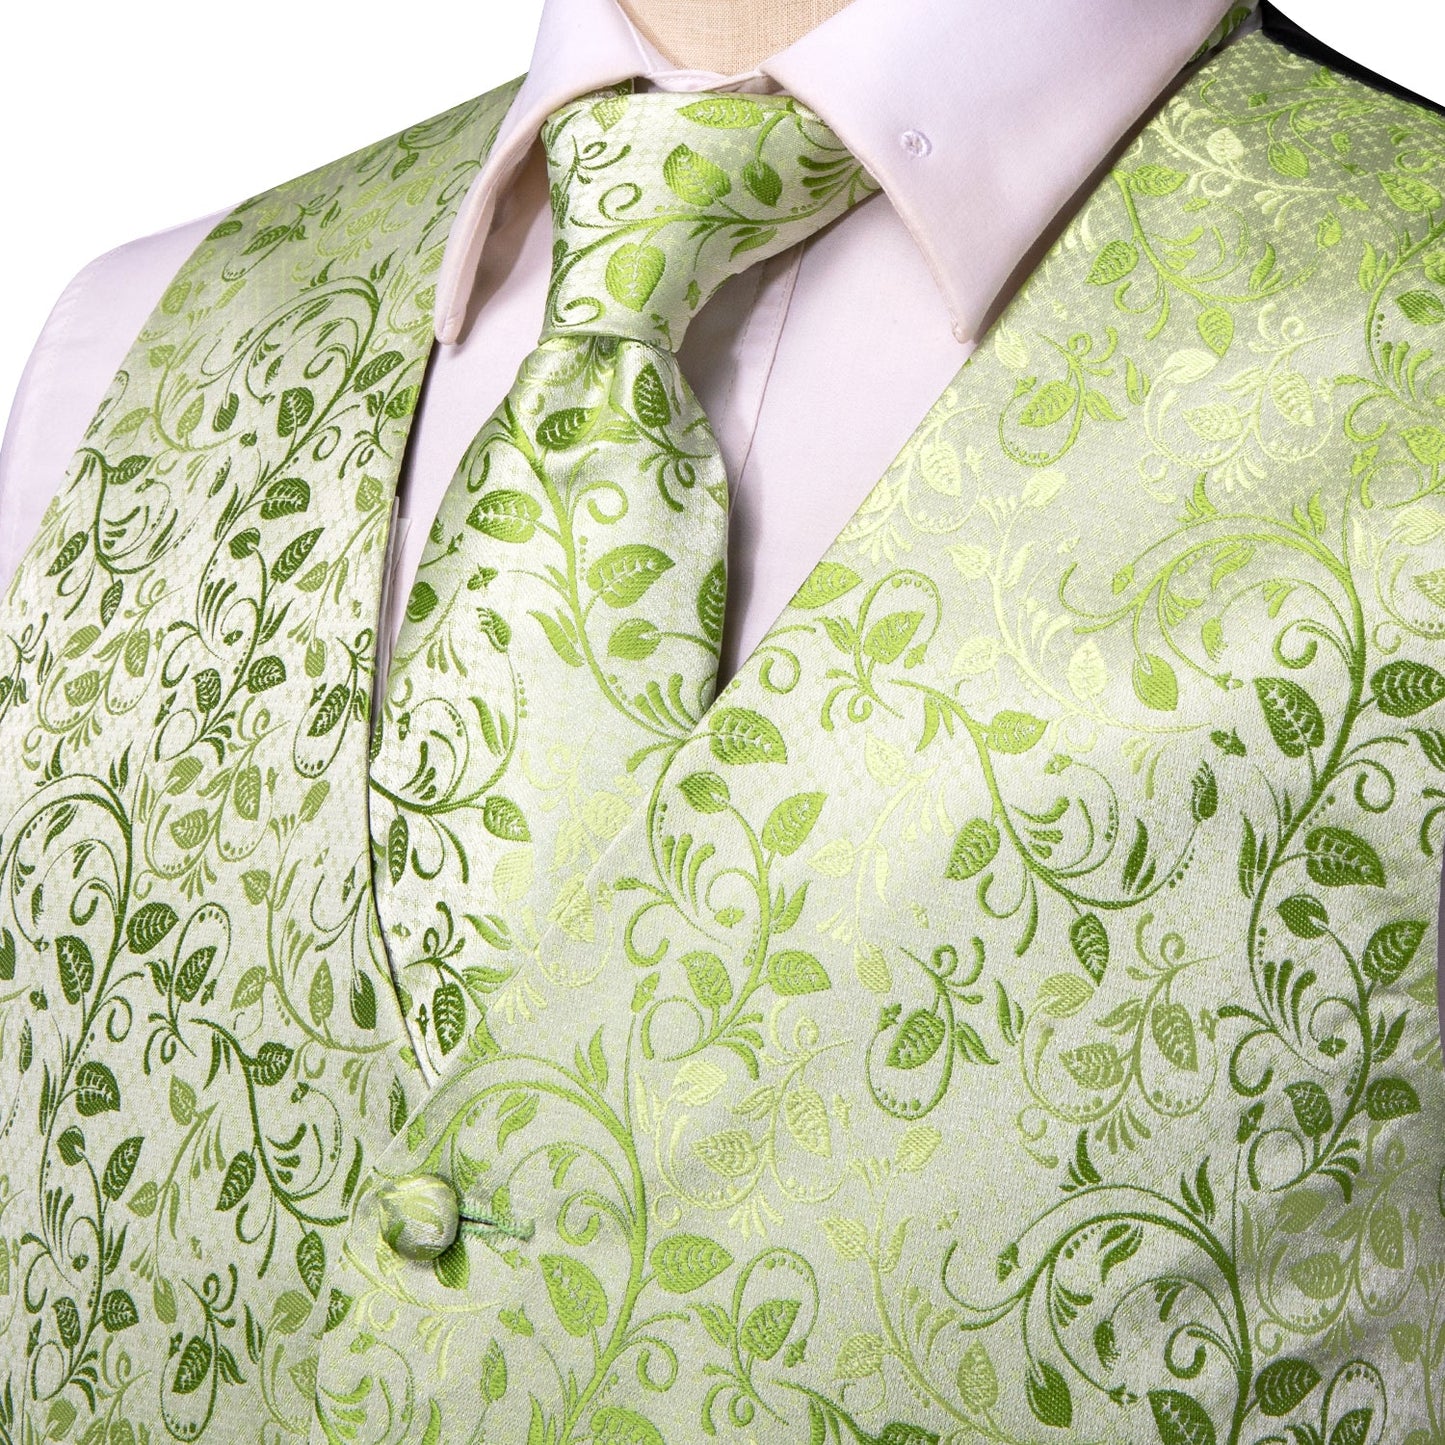 Designer Floral Waistcoat Silky Novelty Vest March Tea